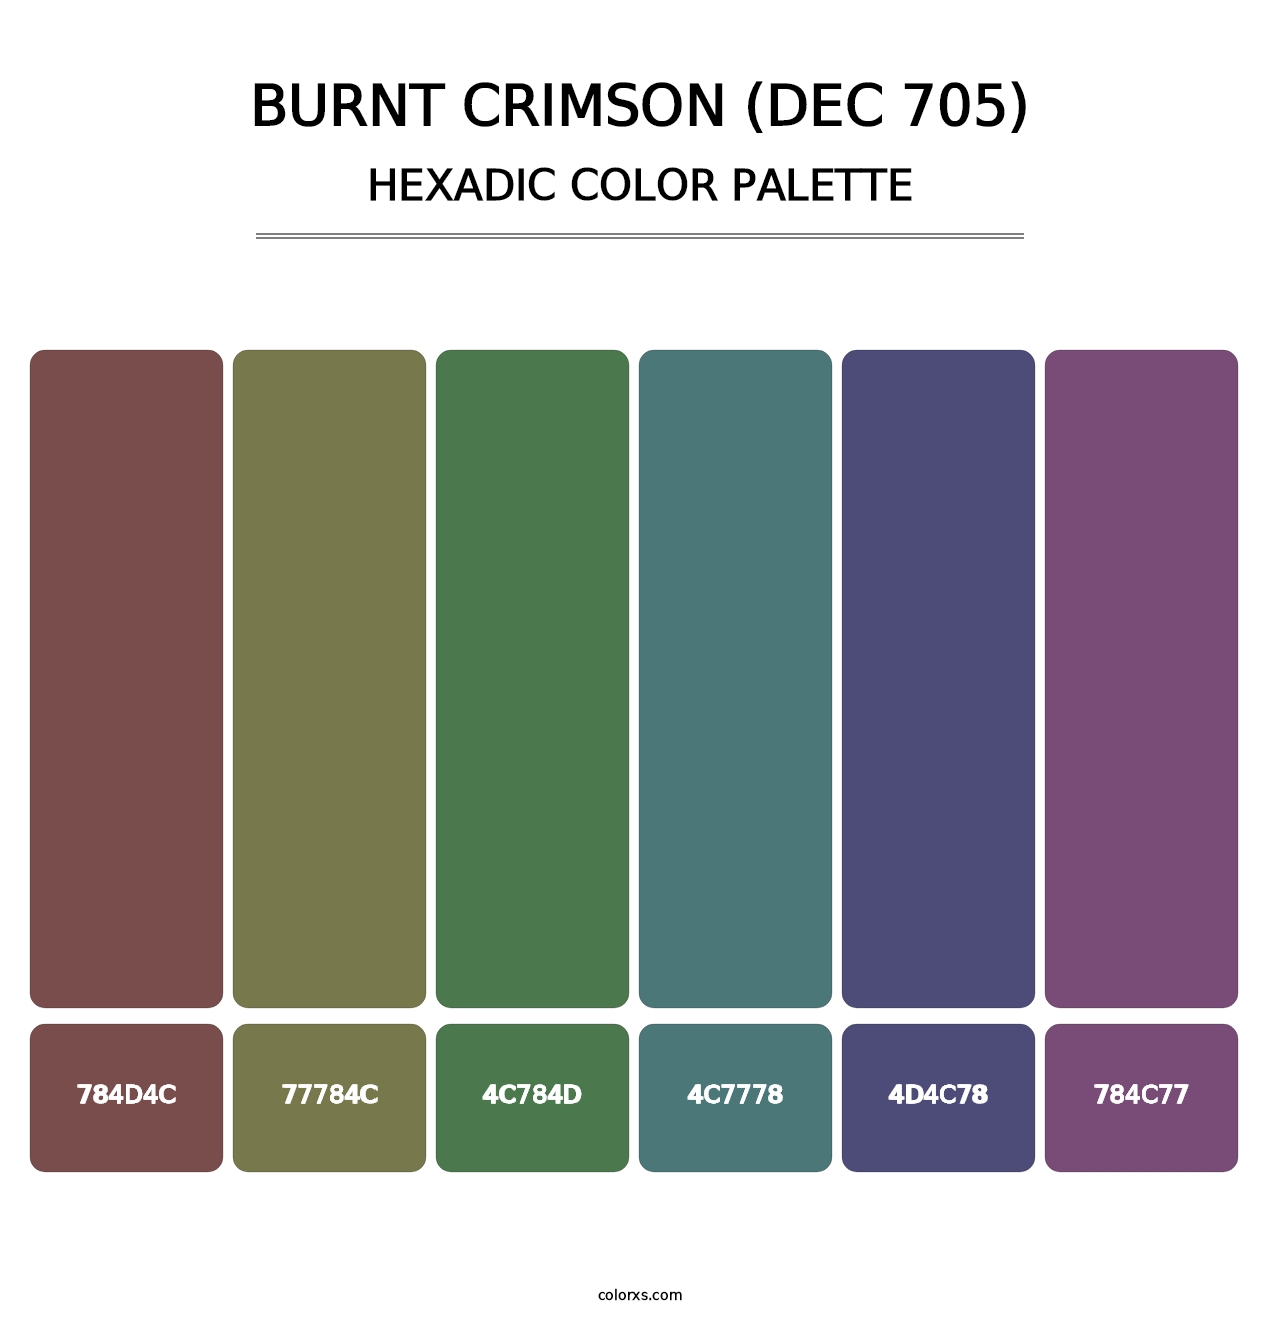 Burnt Crimson (DEC 705) - Hexadic Color Palette